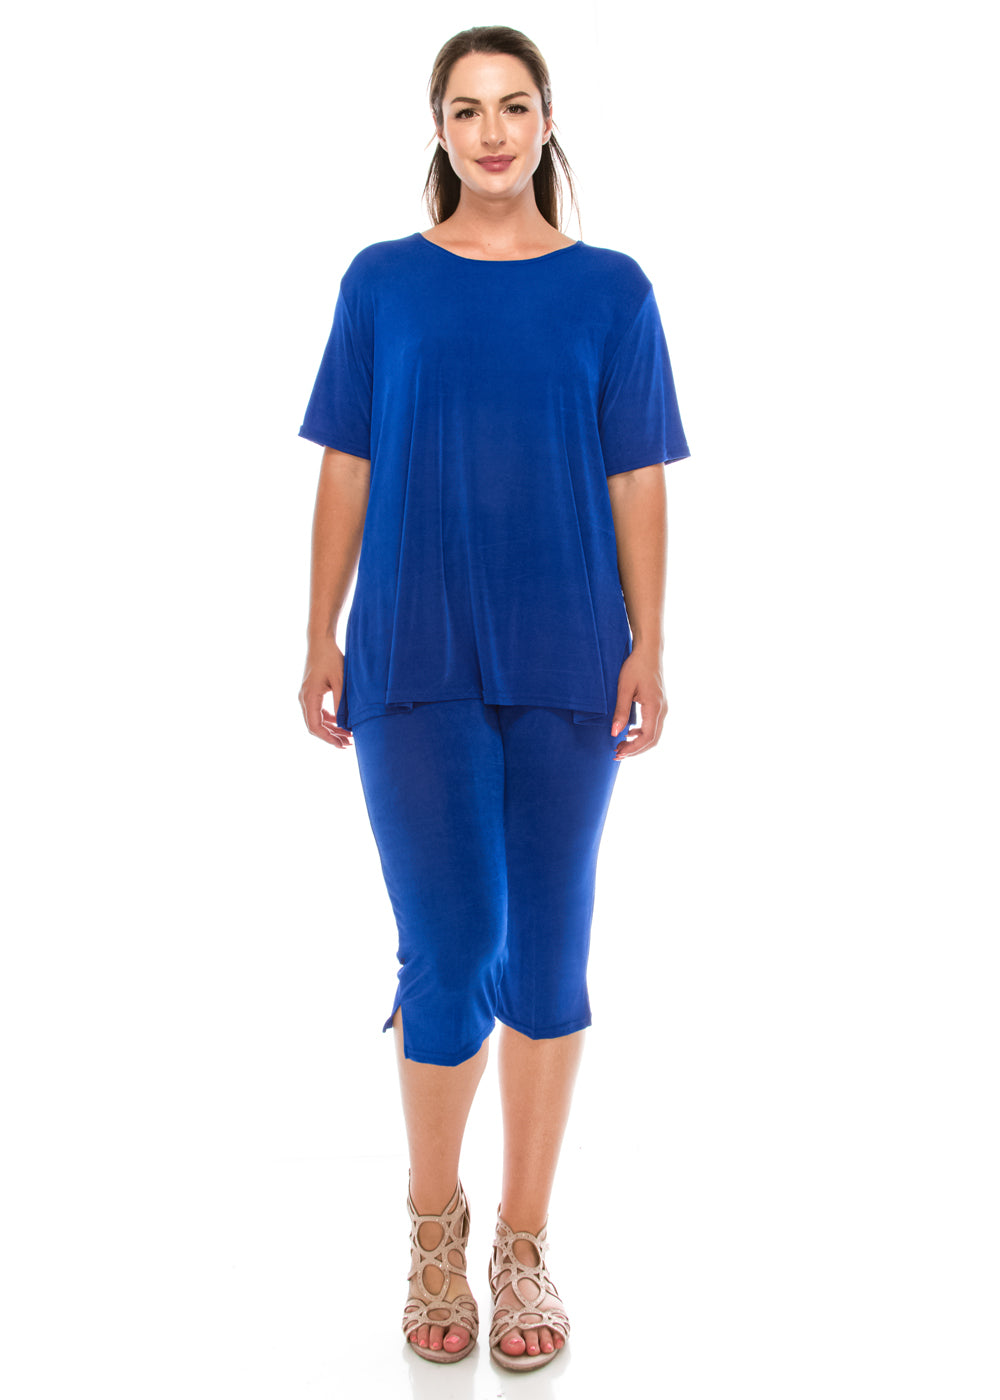 Jostar Women's Stretchy Capri Pant Set Short Sleeve in Plus Size, 903BN-SX - Jostar Online